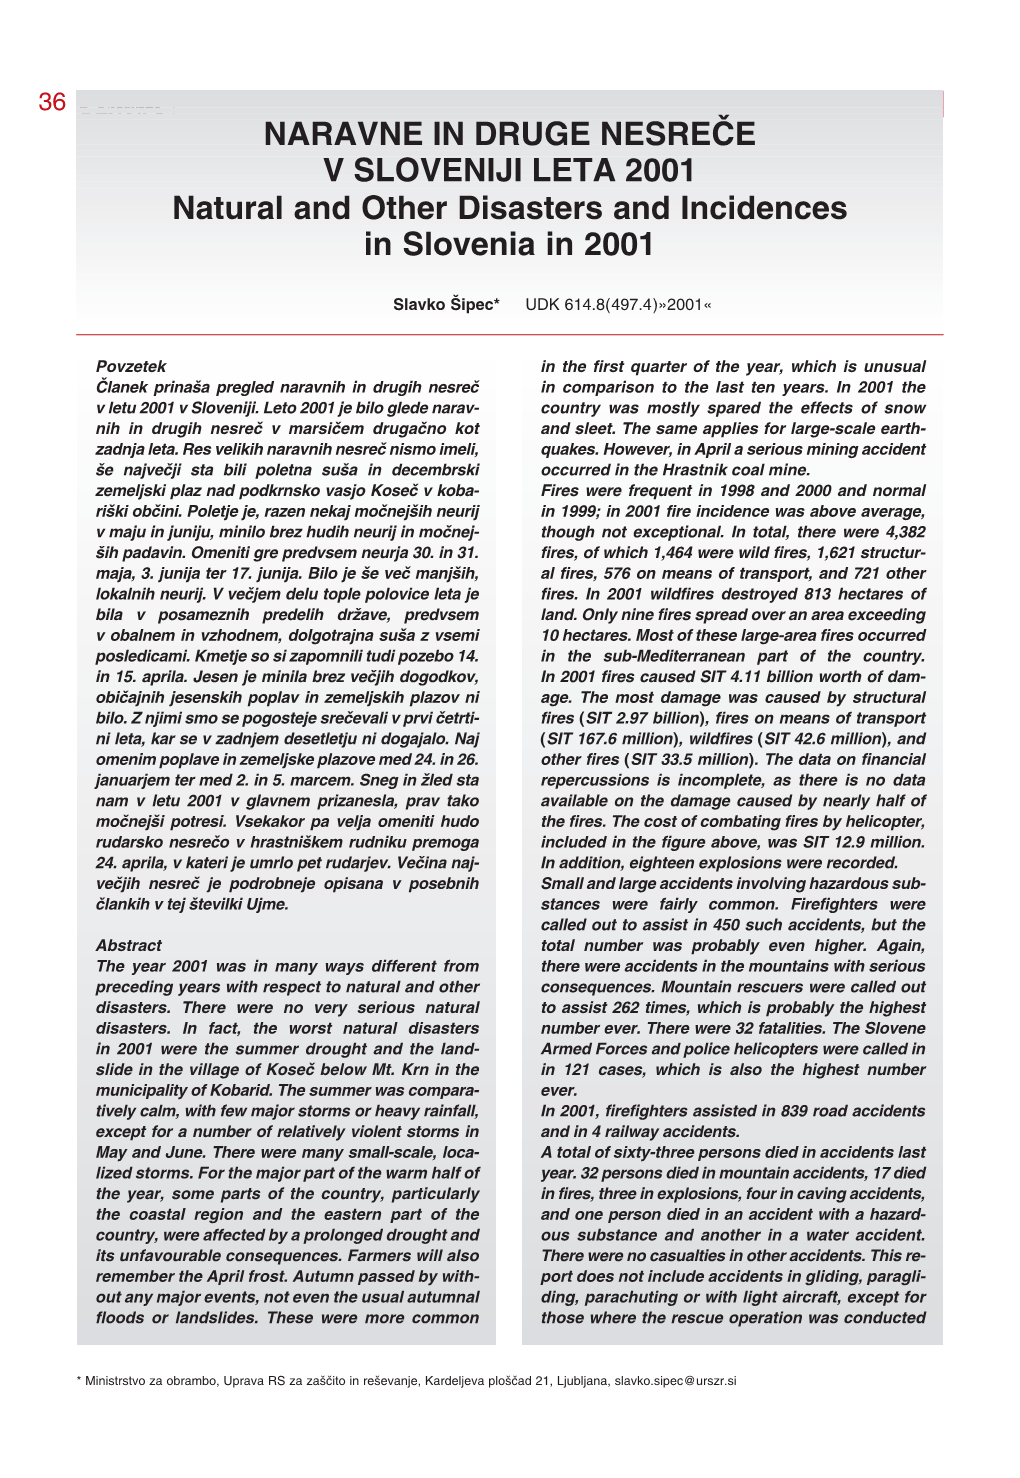 NARAVNE in DRUGE NESREŒE V SLOVENIJI LETA 2001 Natural and Other Disasters and Incidences in Slovenia in 2001